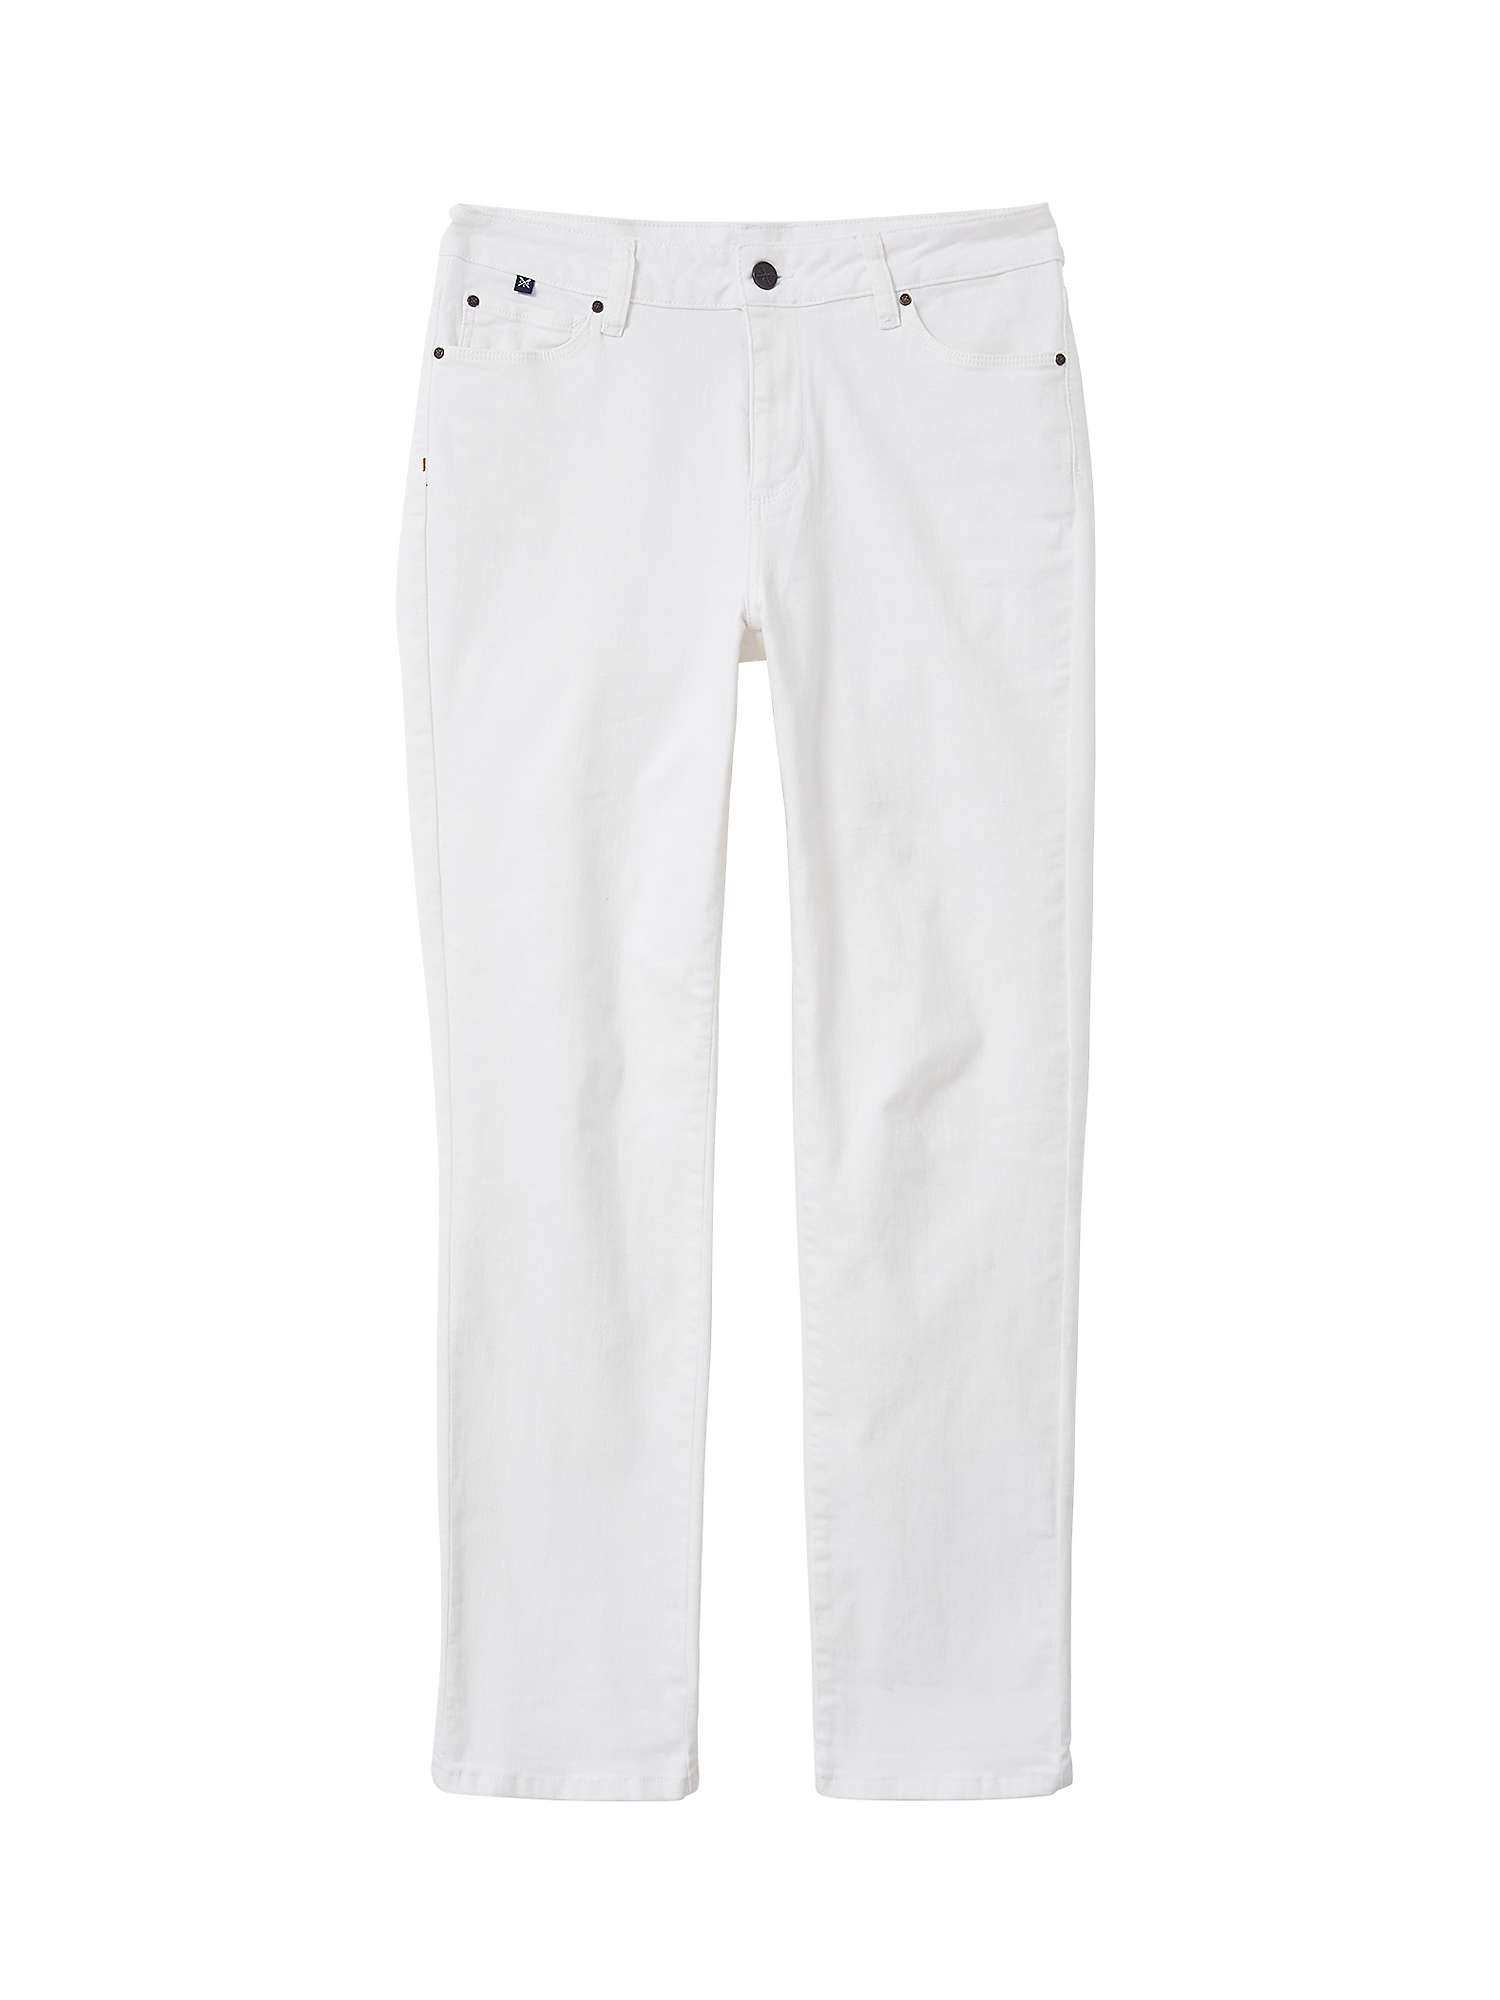 Buy Crew Clothing Straight Leg Ankle Grazer Jeans, White Online at johnlewis.com